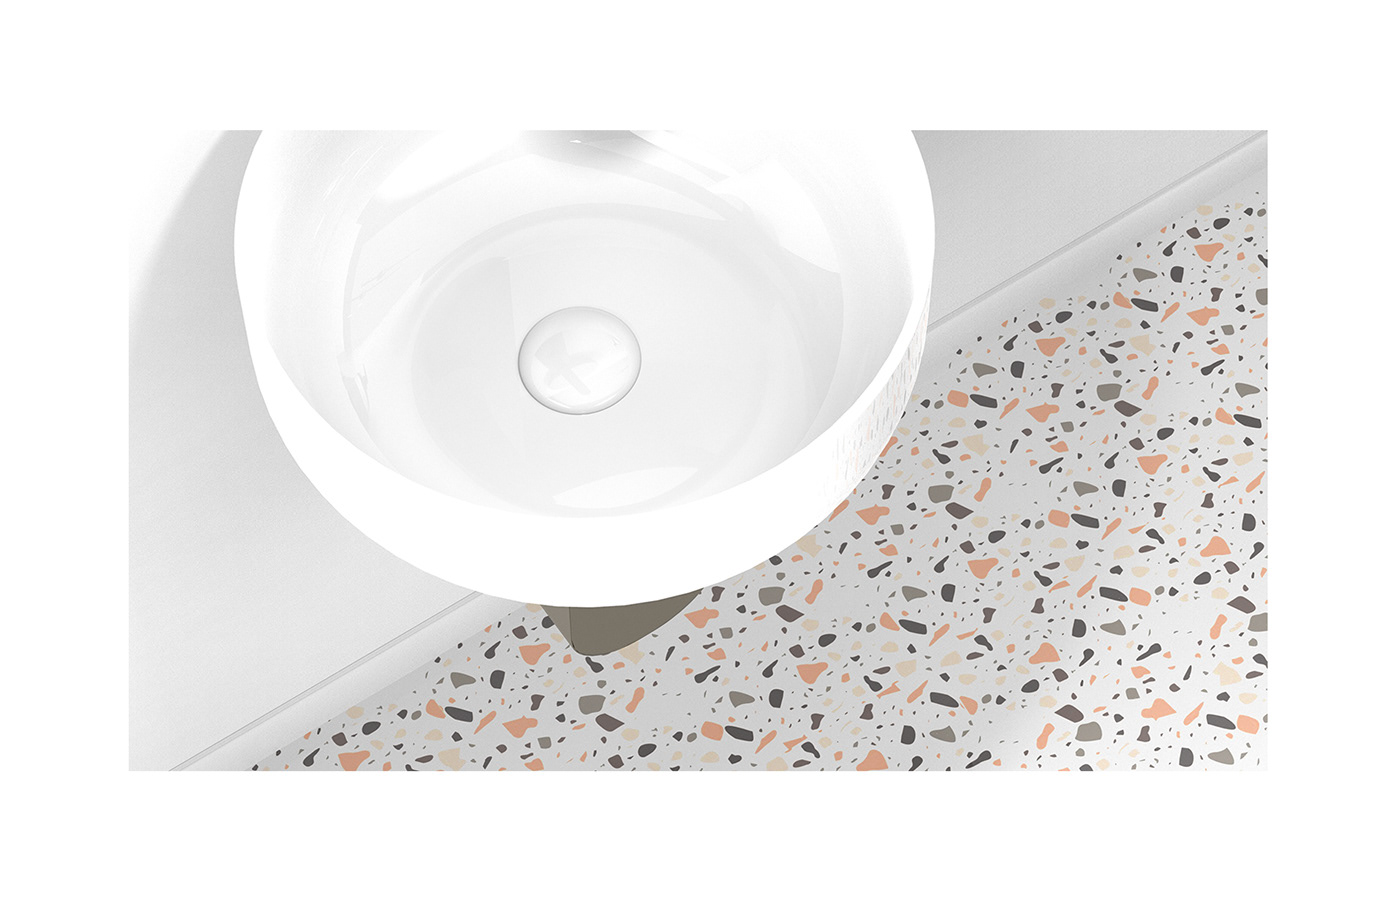 Basin bathroom product design  ceramic Minimalism home washbasin interior design  architecture industrial design 